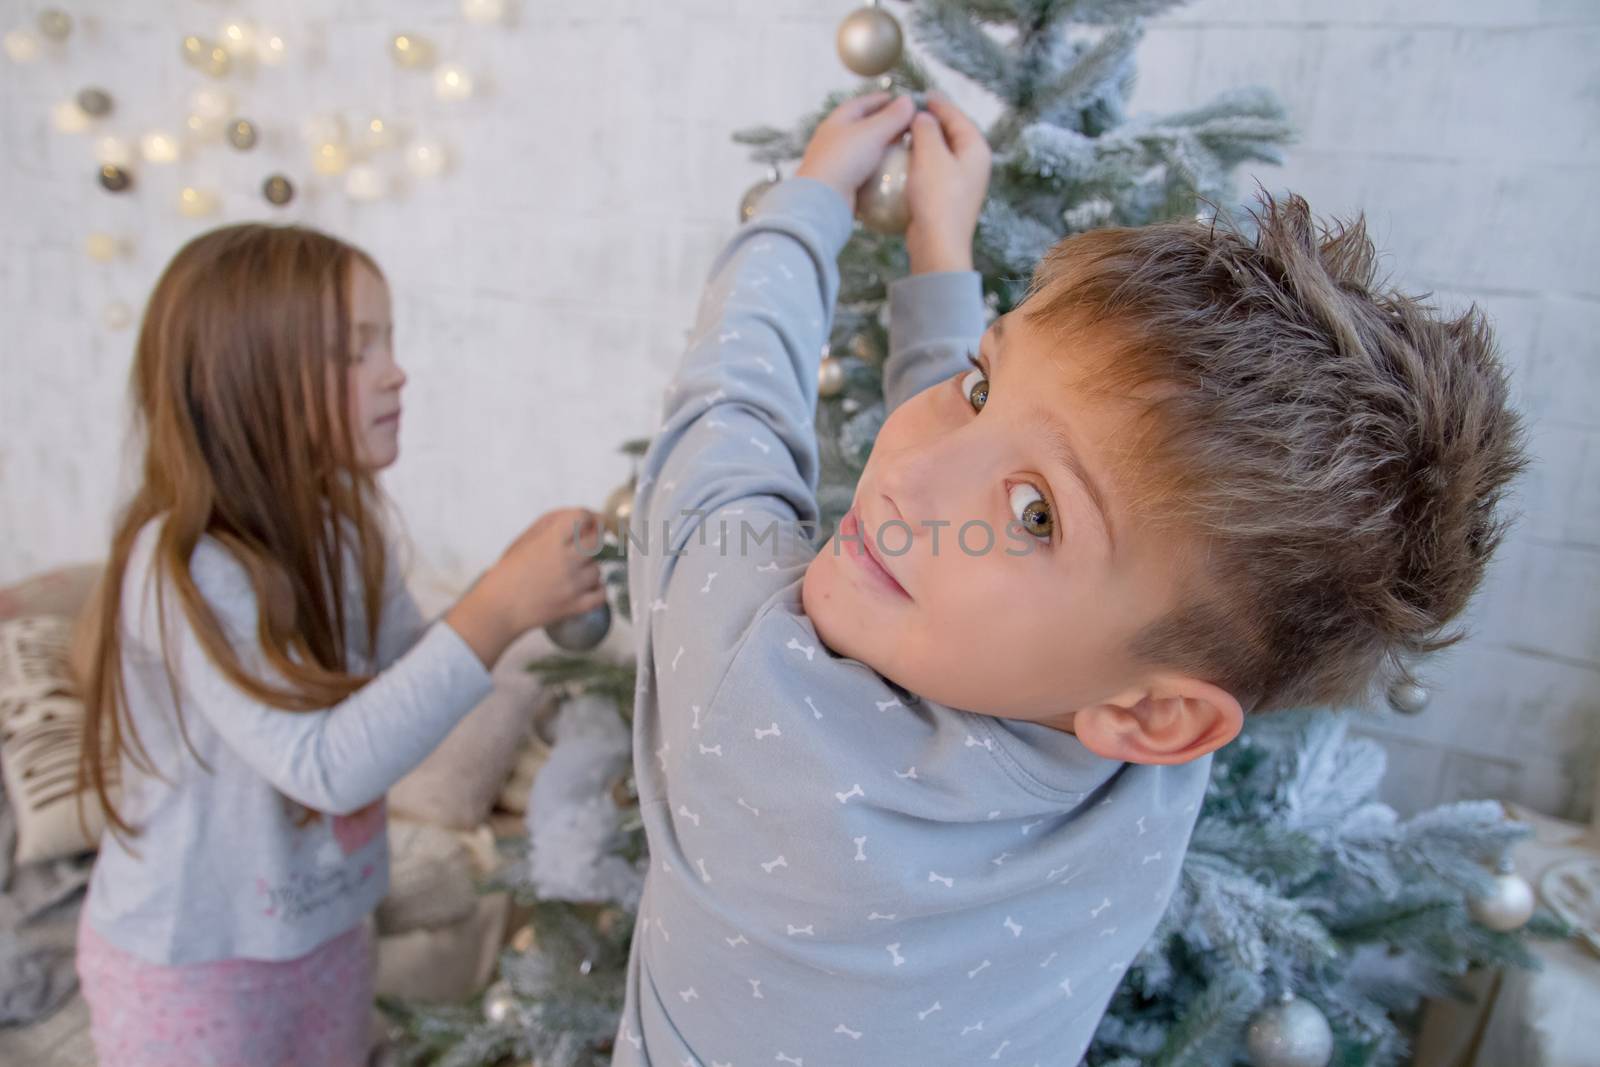 Boy and girl decorating Christmas tree with balls